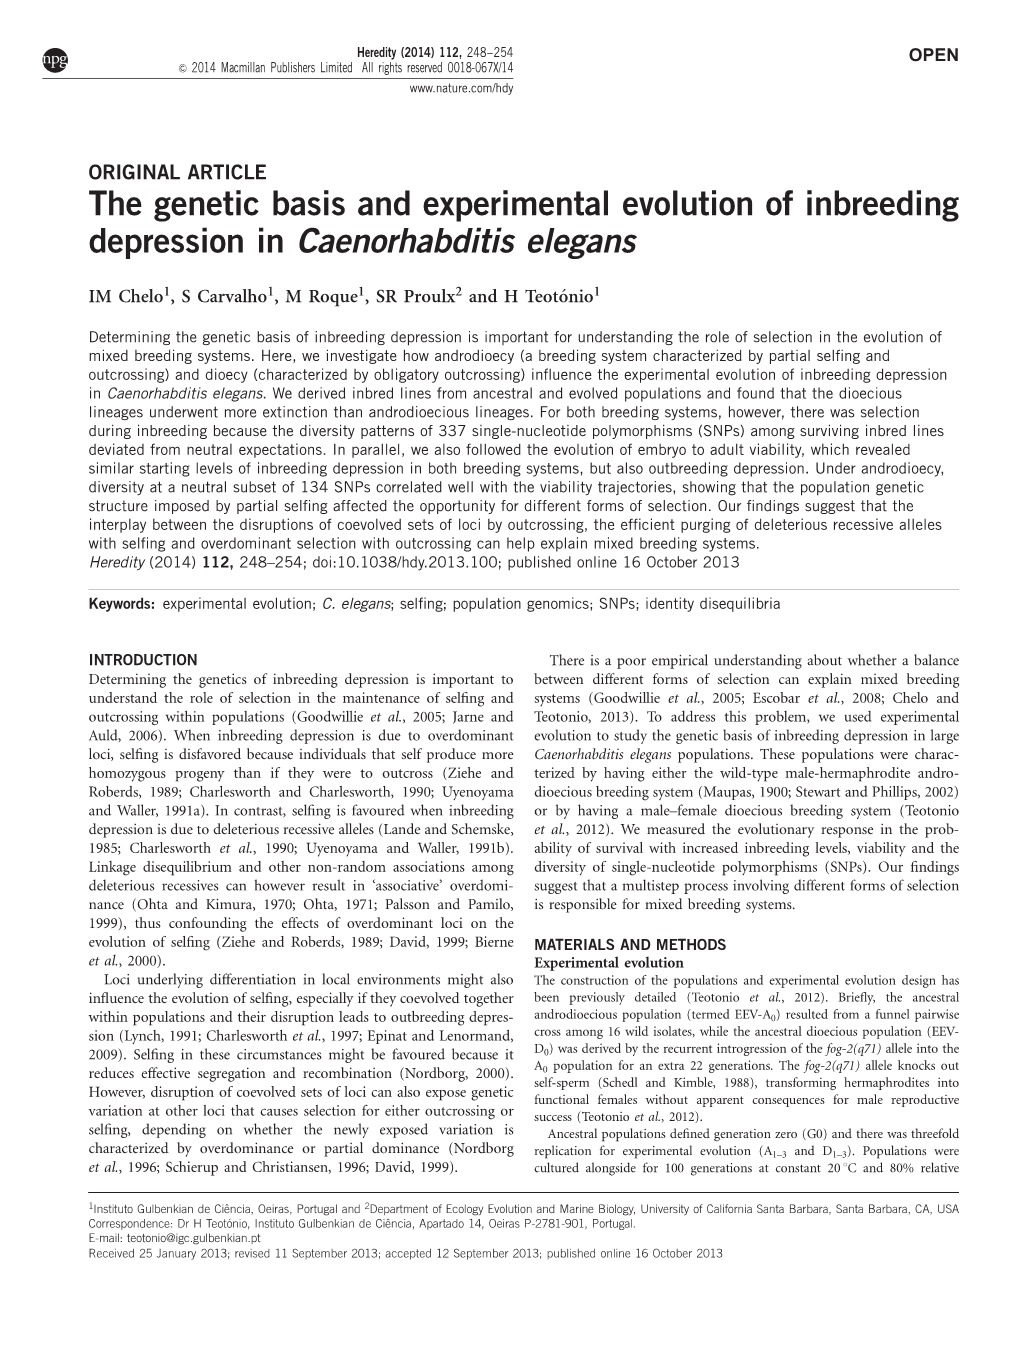 The Genetic Basis and Experimental Evolution of Inbreeding Depression in Caenorhabditis Elegans